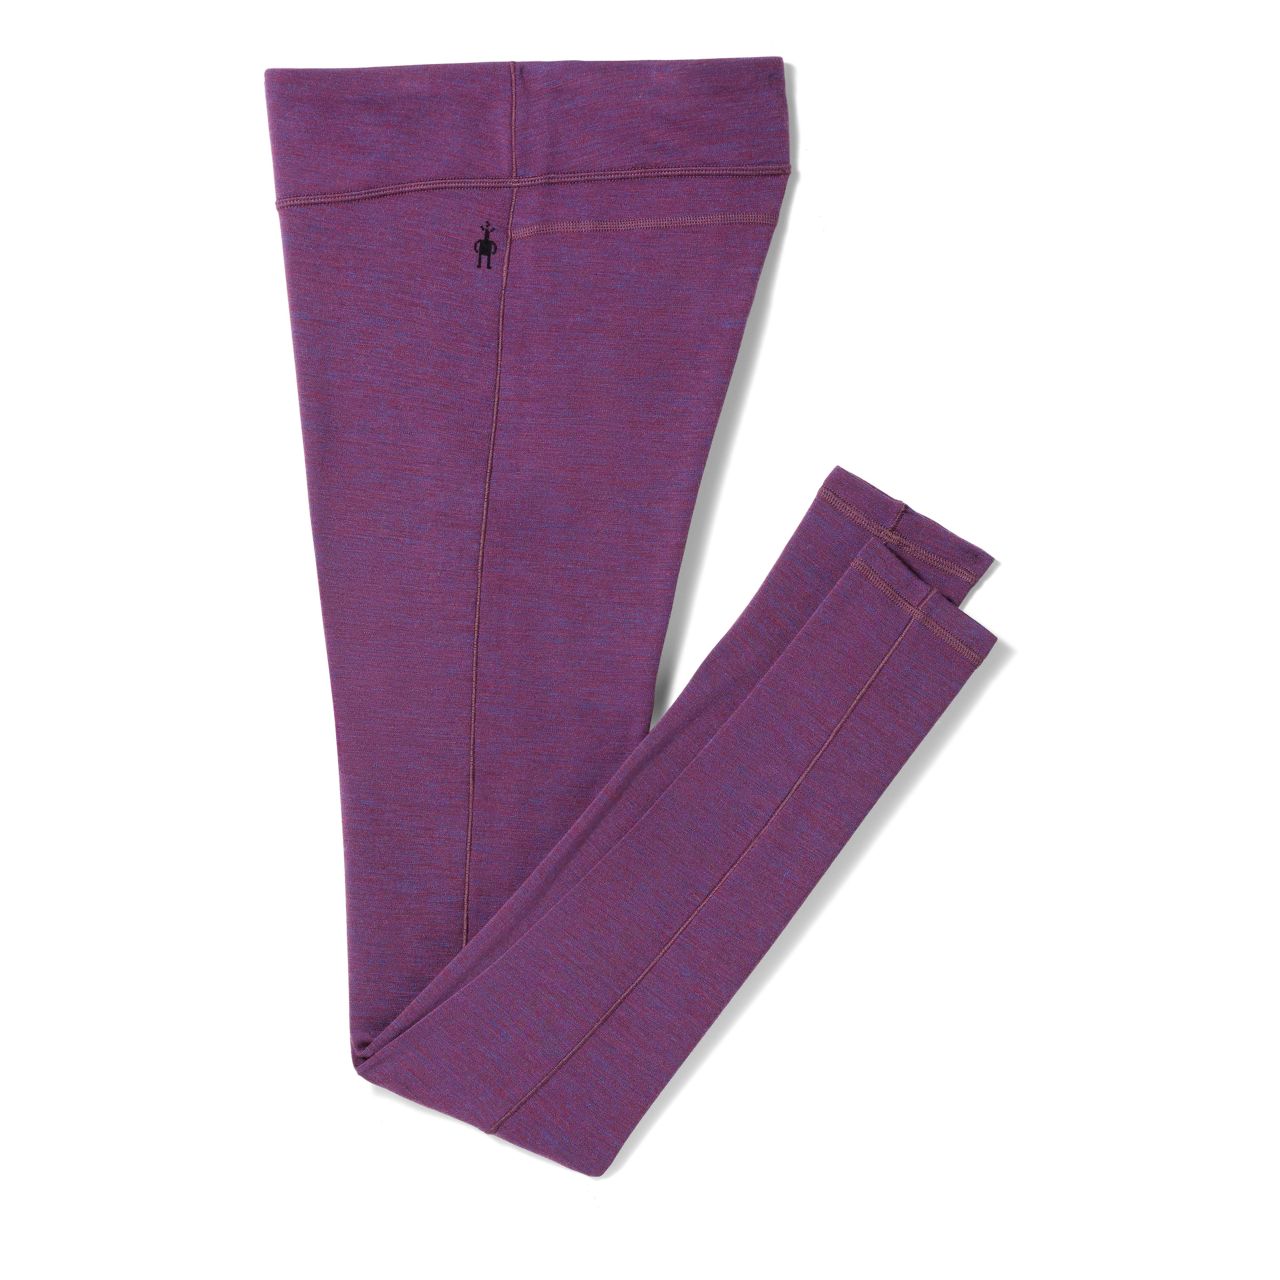 MERIWOOL Women's Merino Wool Midweight Baselayer Bottom - Purple